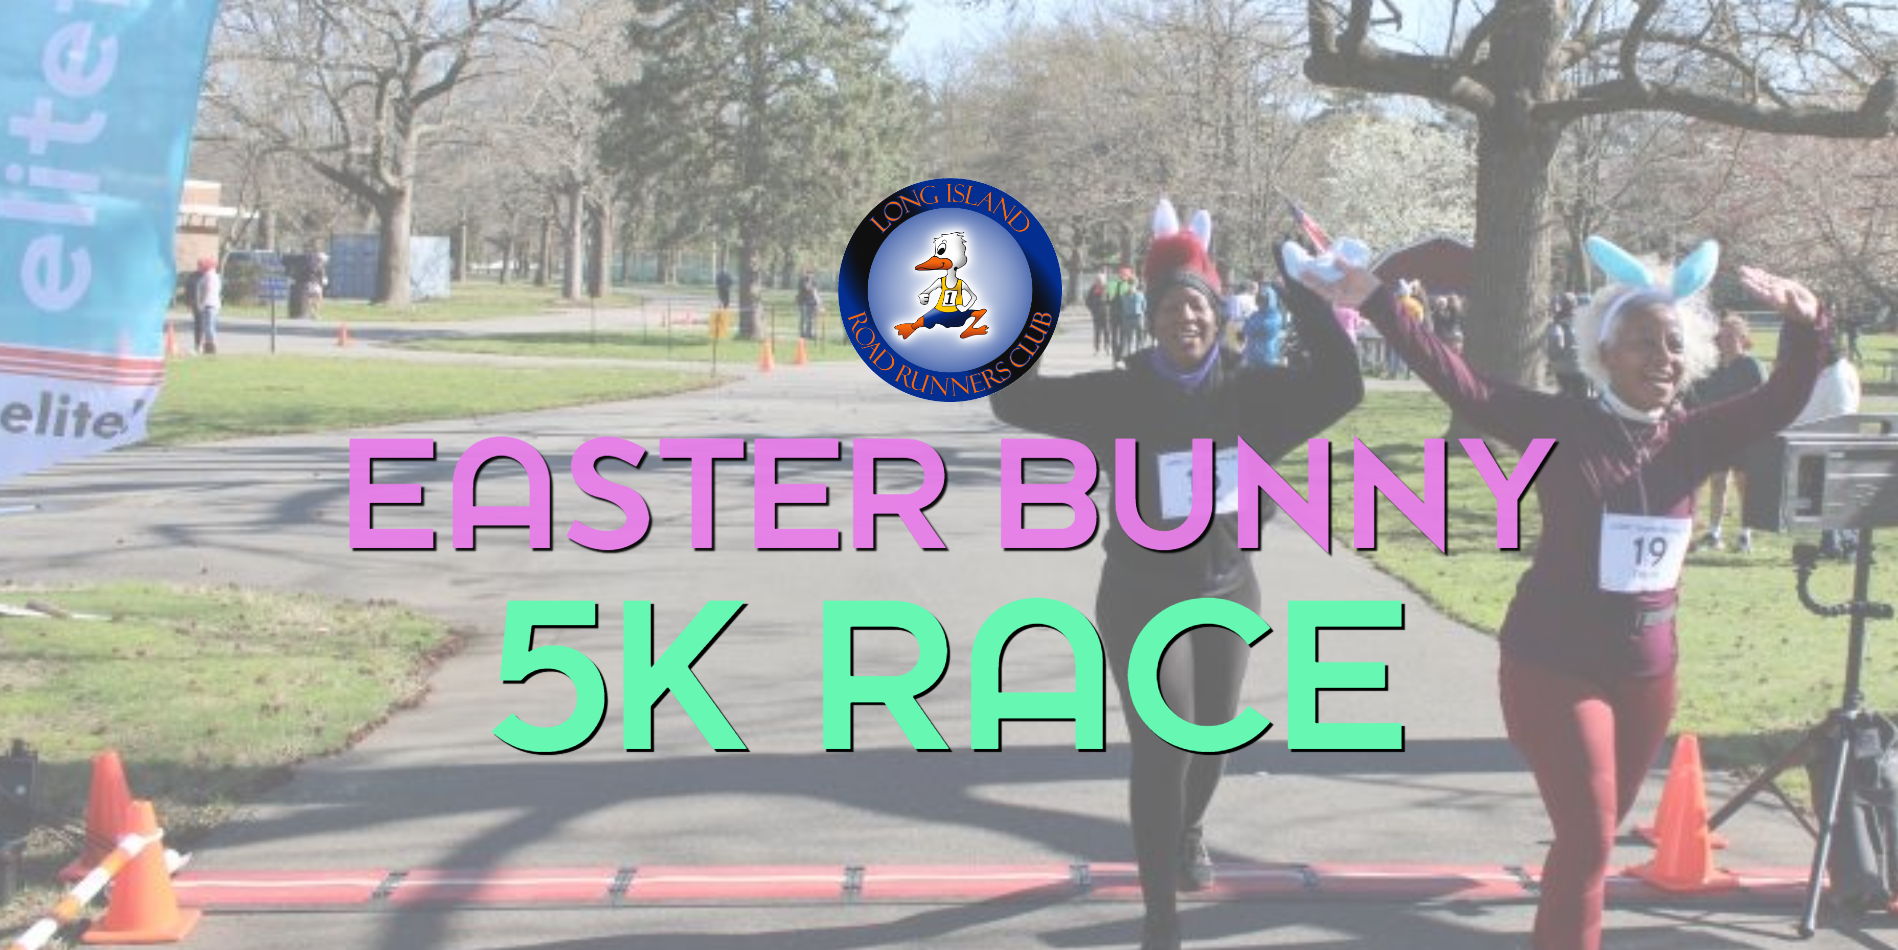 Easter Bunny 5K Race Run/Walk promotional image